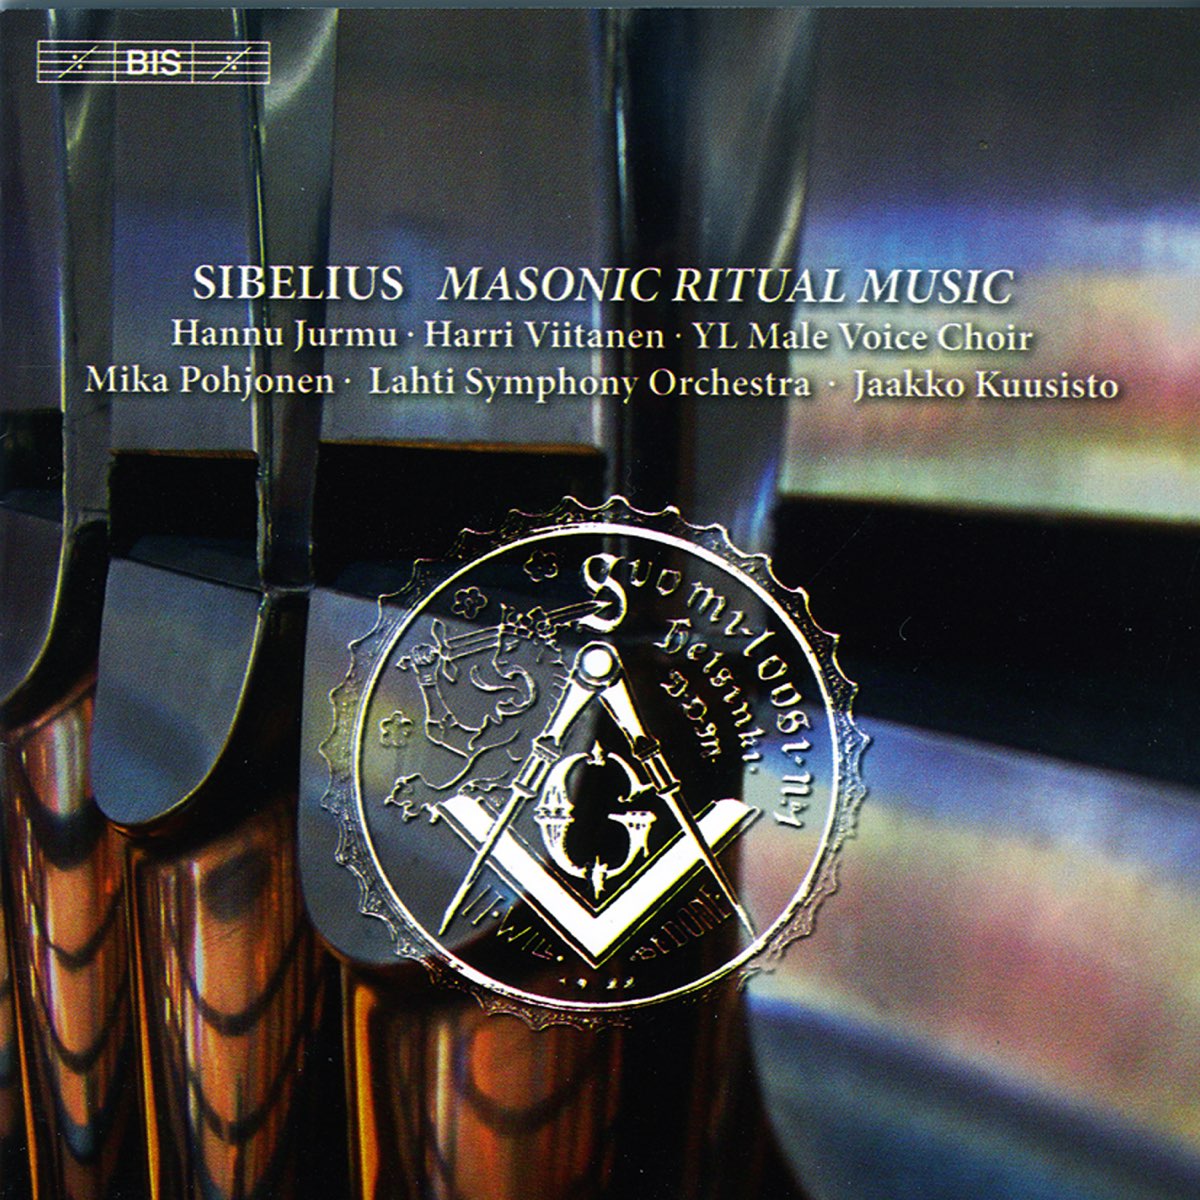 Sibelius: Masonic Ritual Music - Album by Various Artists - Apple Music